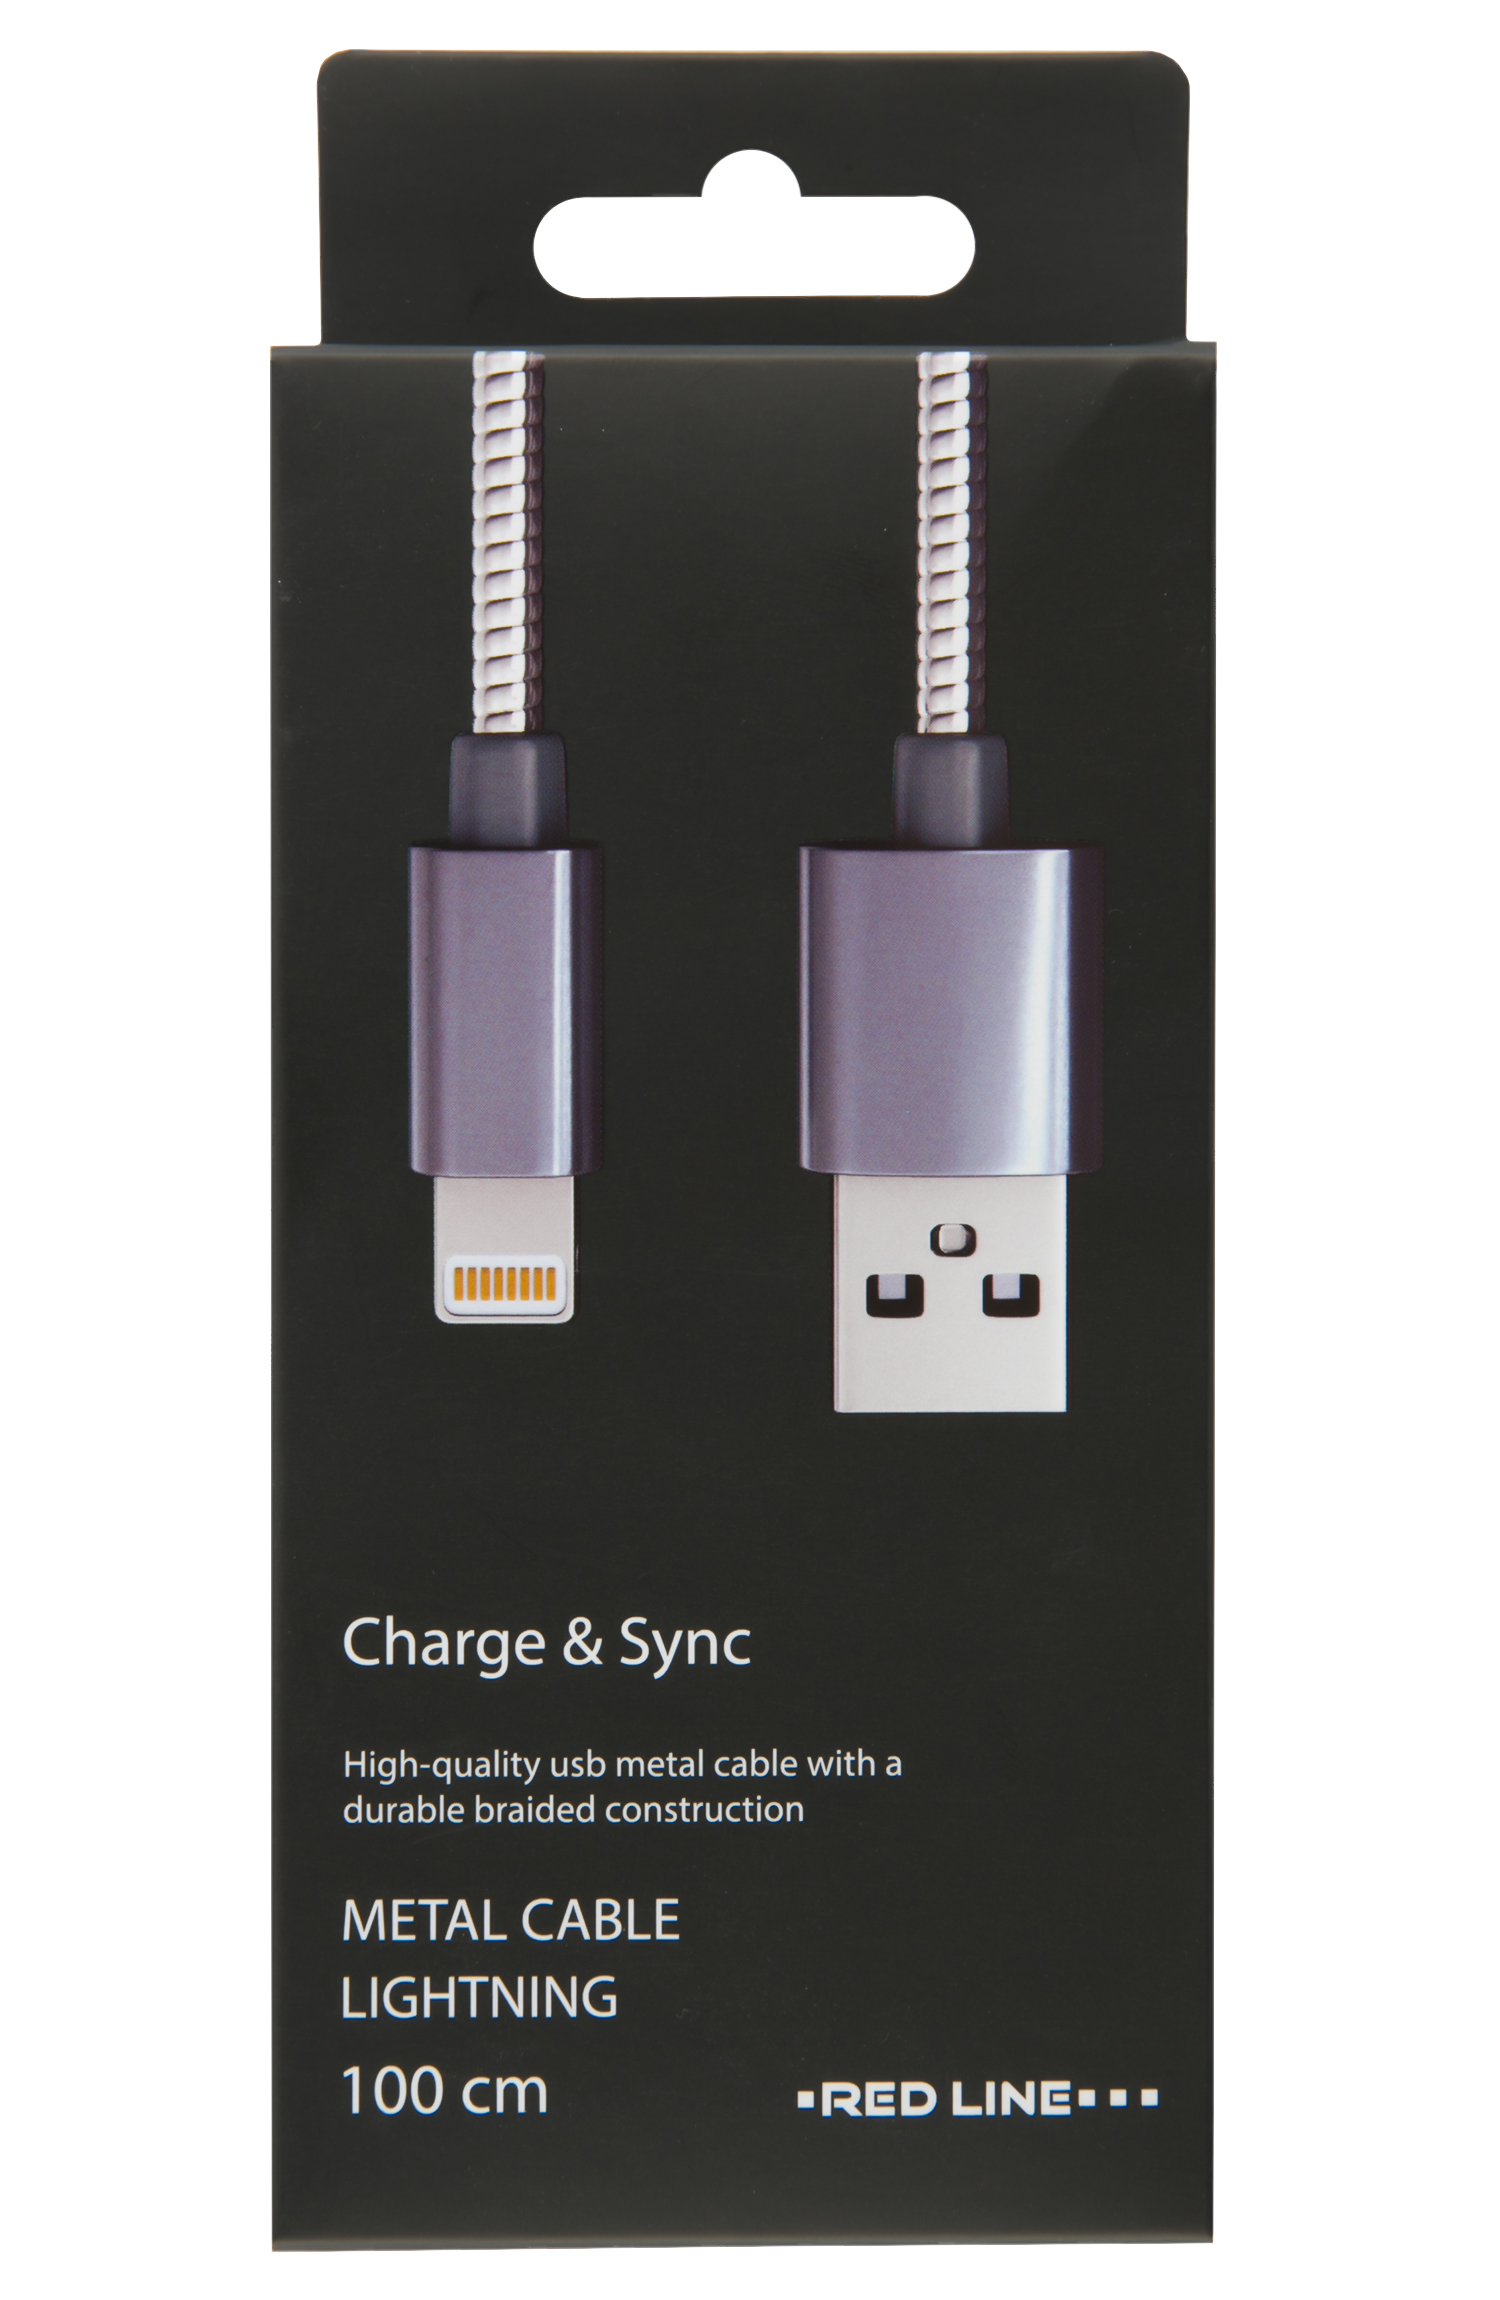 Дата-кабель Red Line S7 USB - 8 - pin для Apple